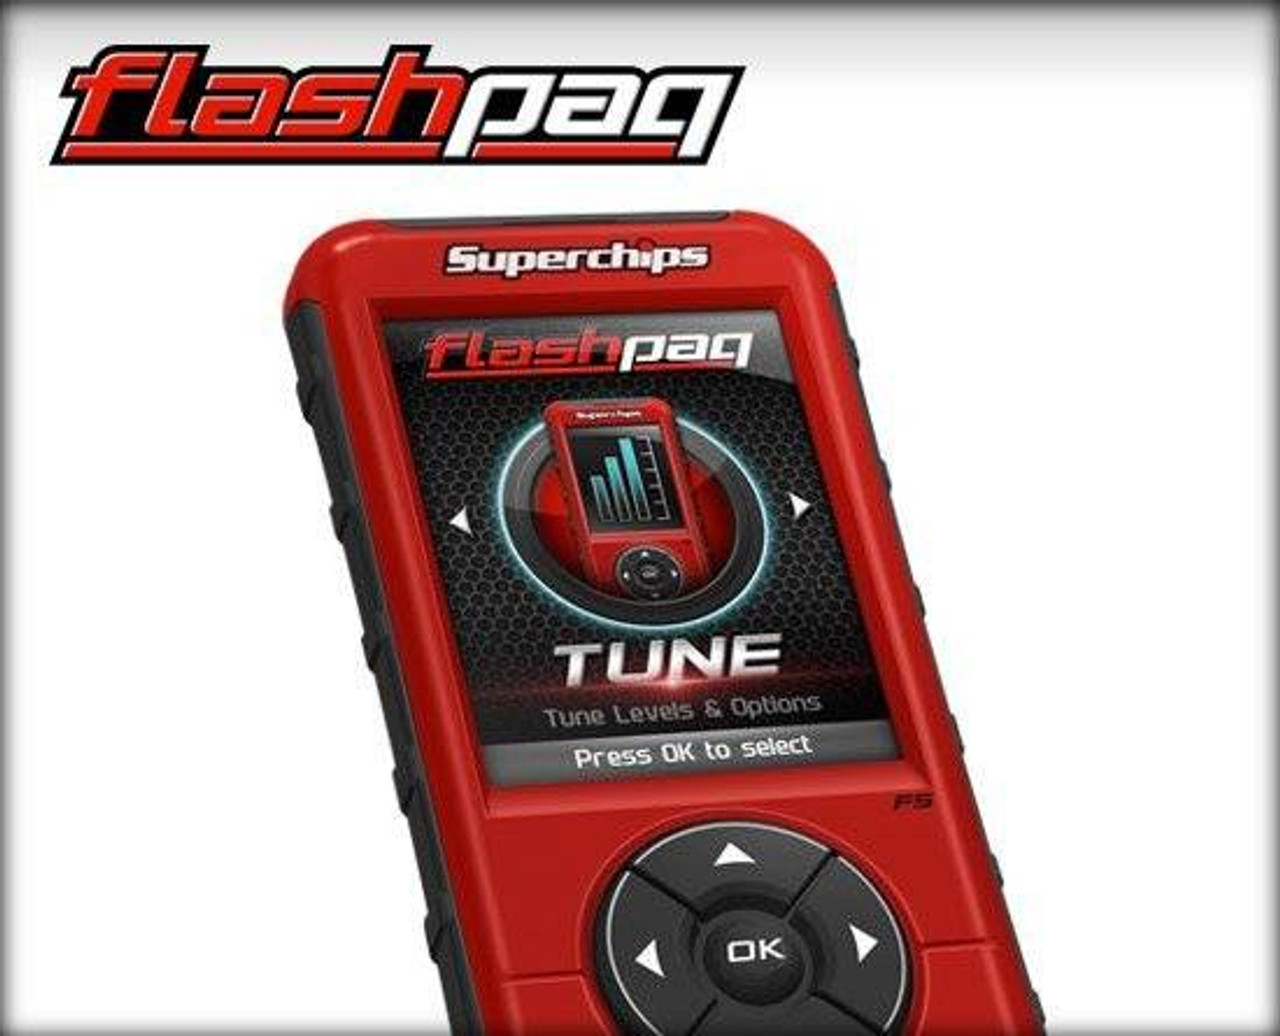 Superchips Flashpaq F5 Pro Plus Custom Tuning Handheld Vessel Loaded With  Tunes